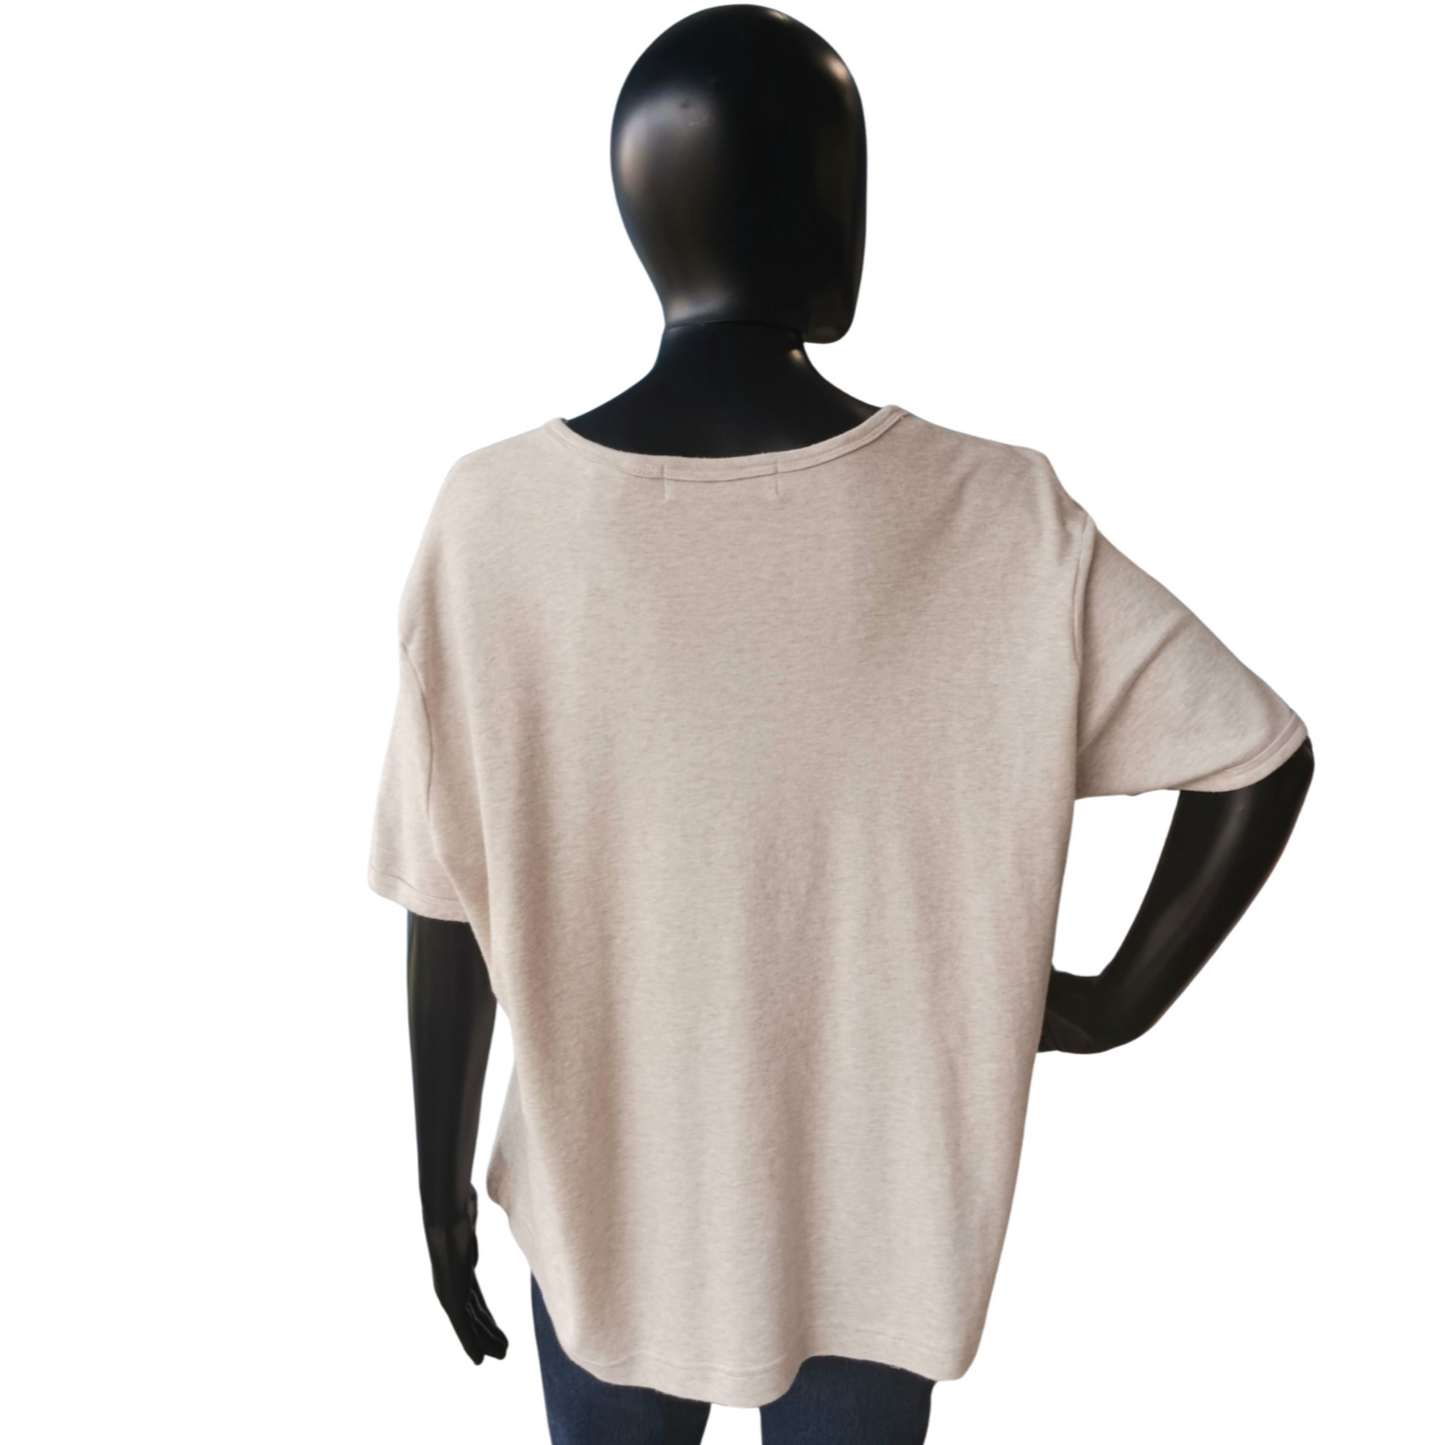 Marsh Landing II Women's Beige Cotton T-shirt, Size 1X